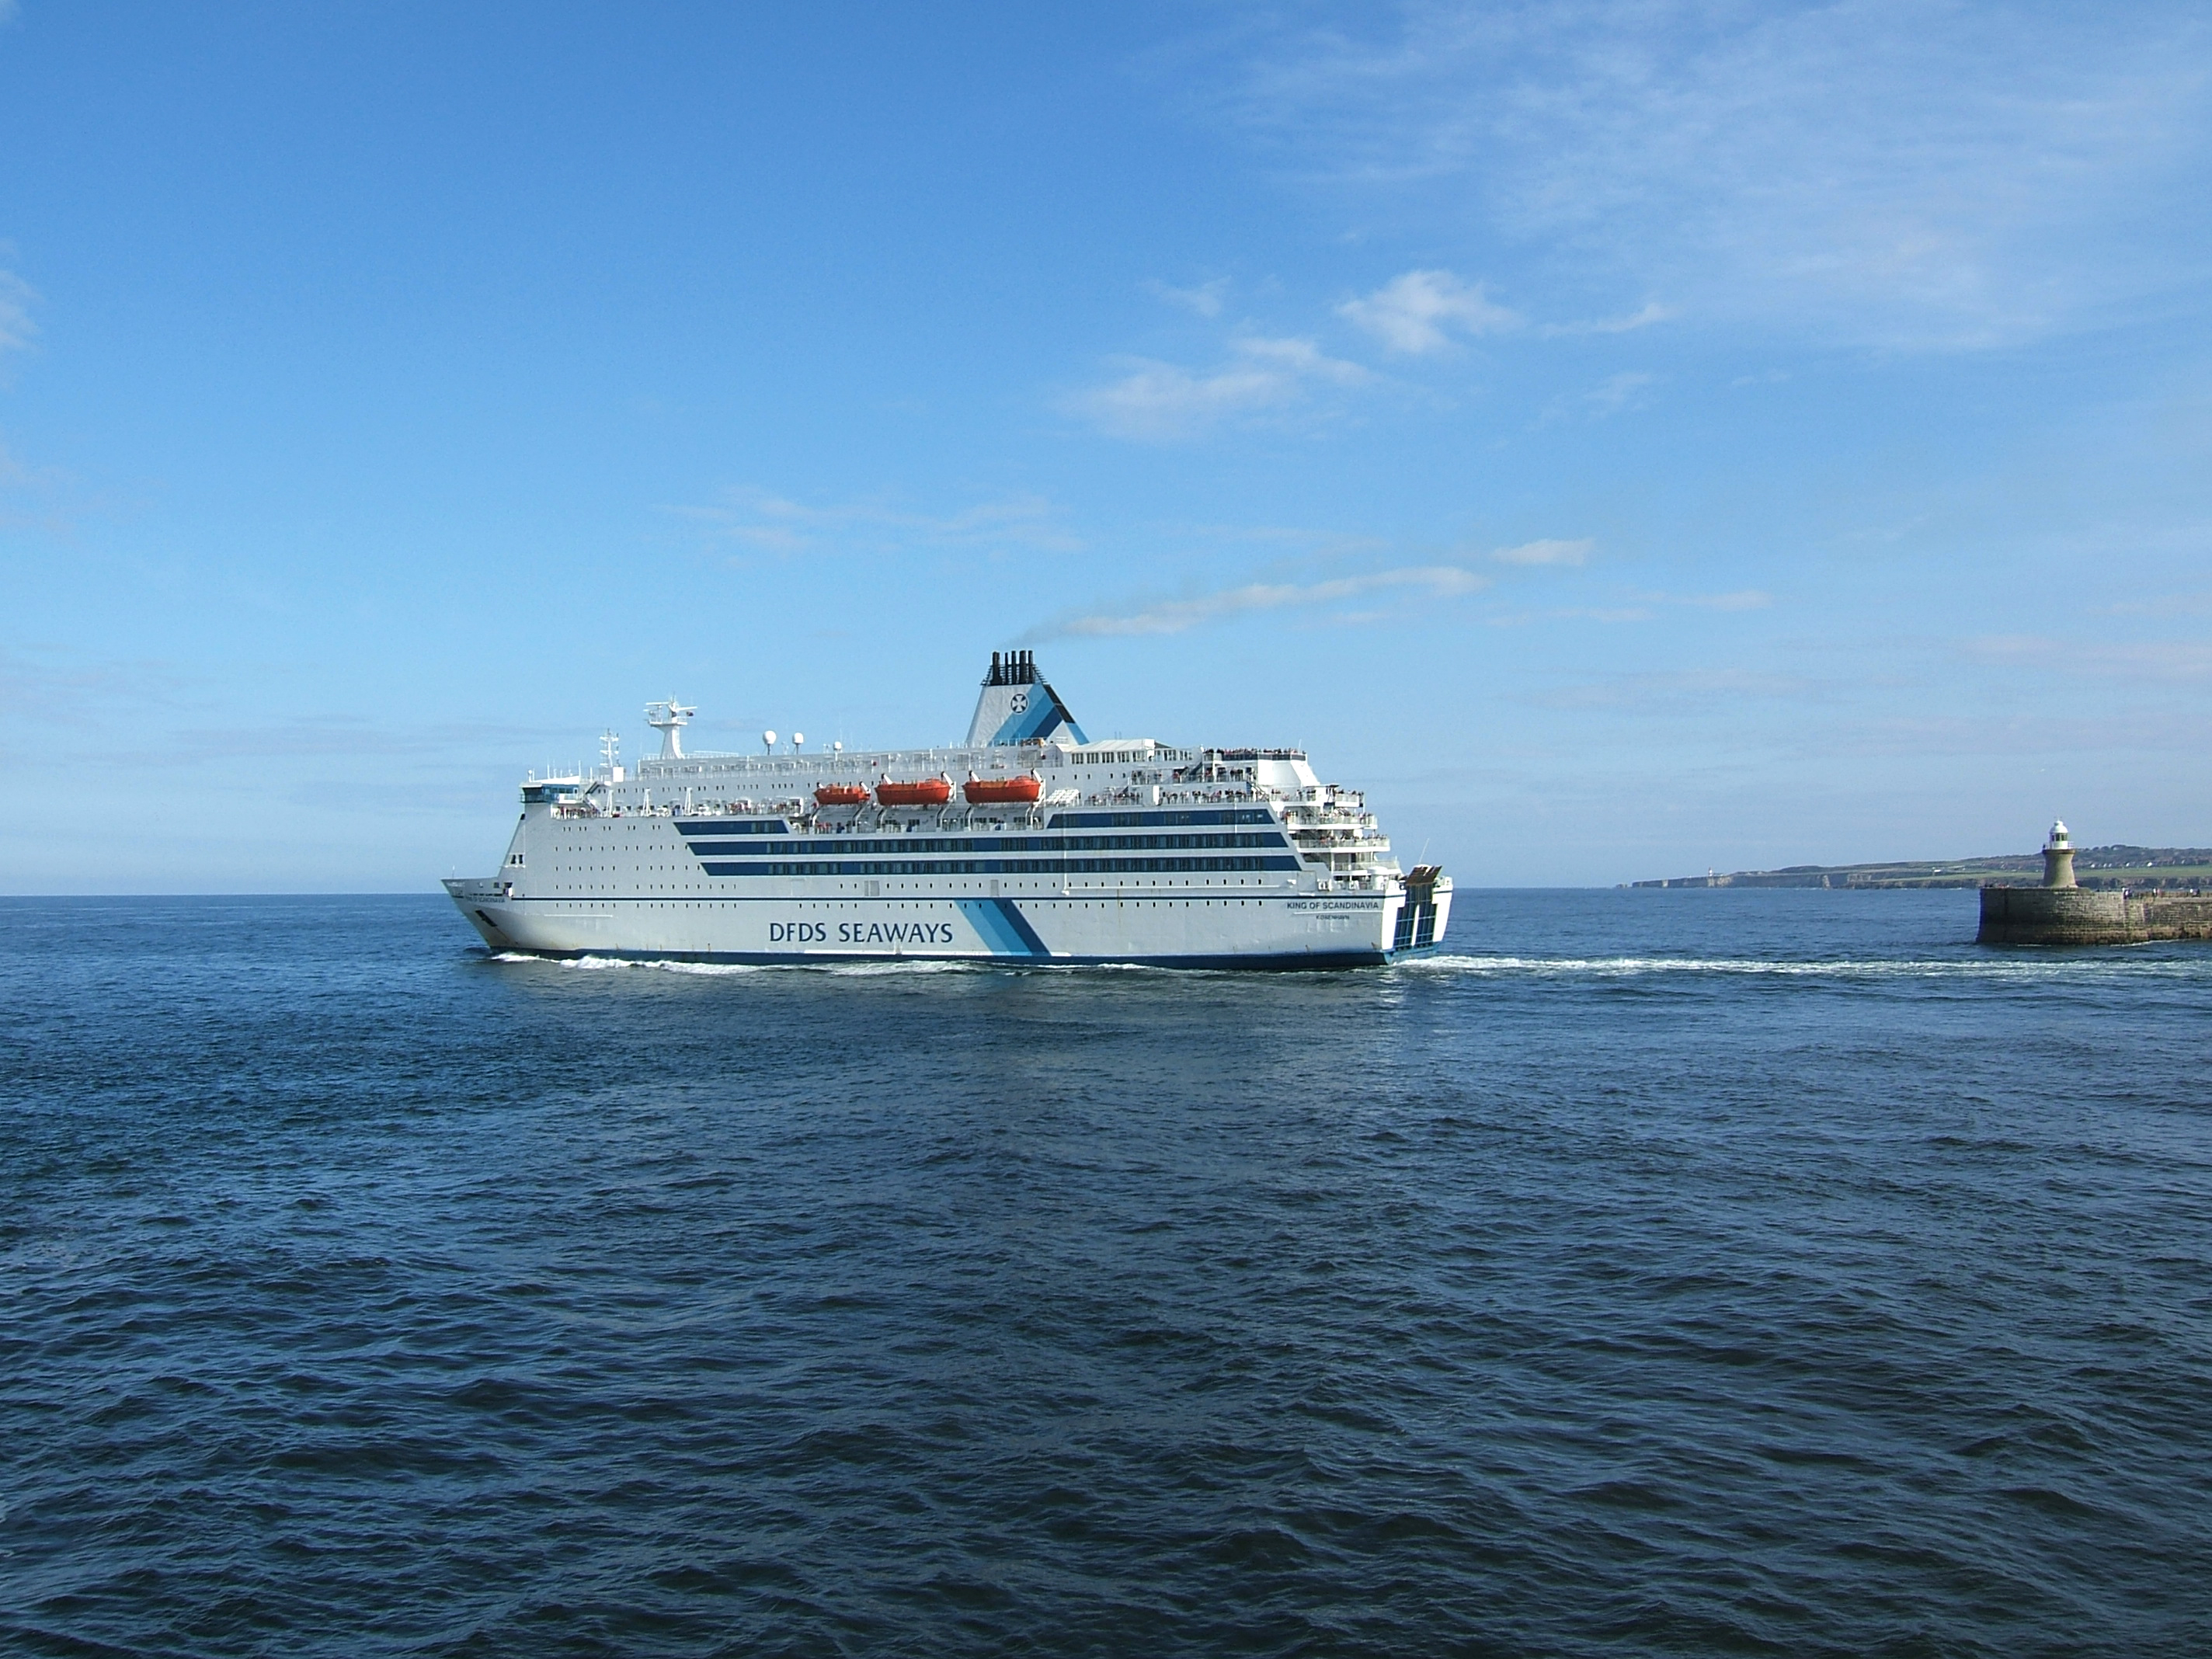 MS King of Scandinavia leaving the Tyne 3